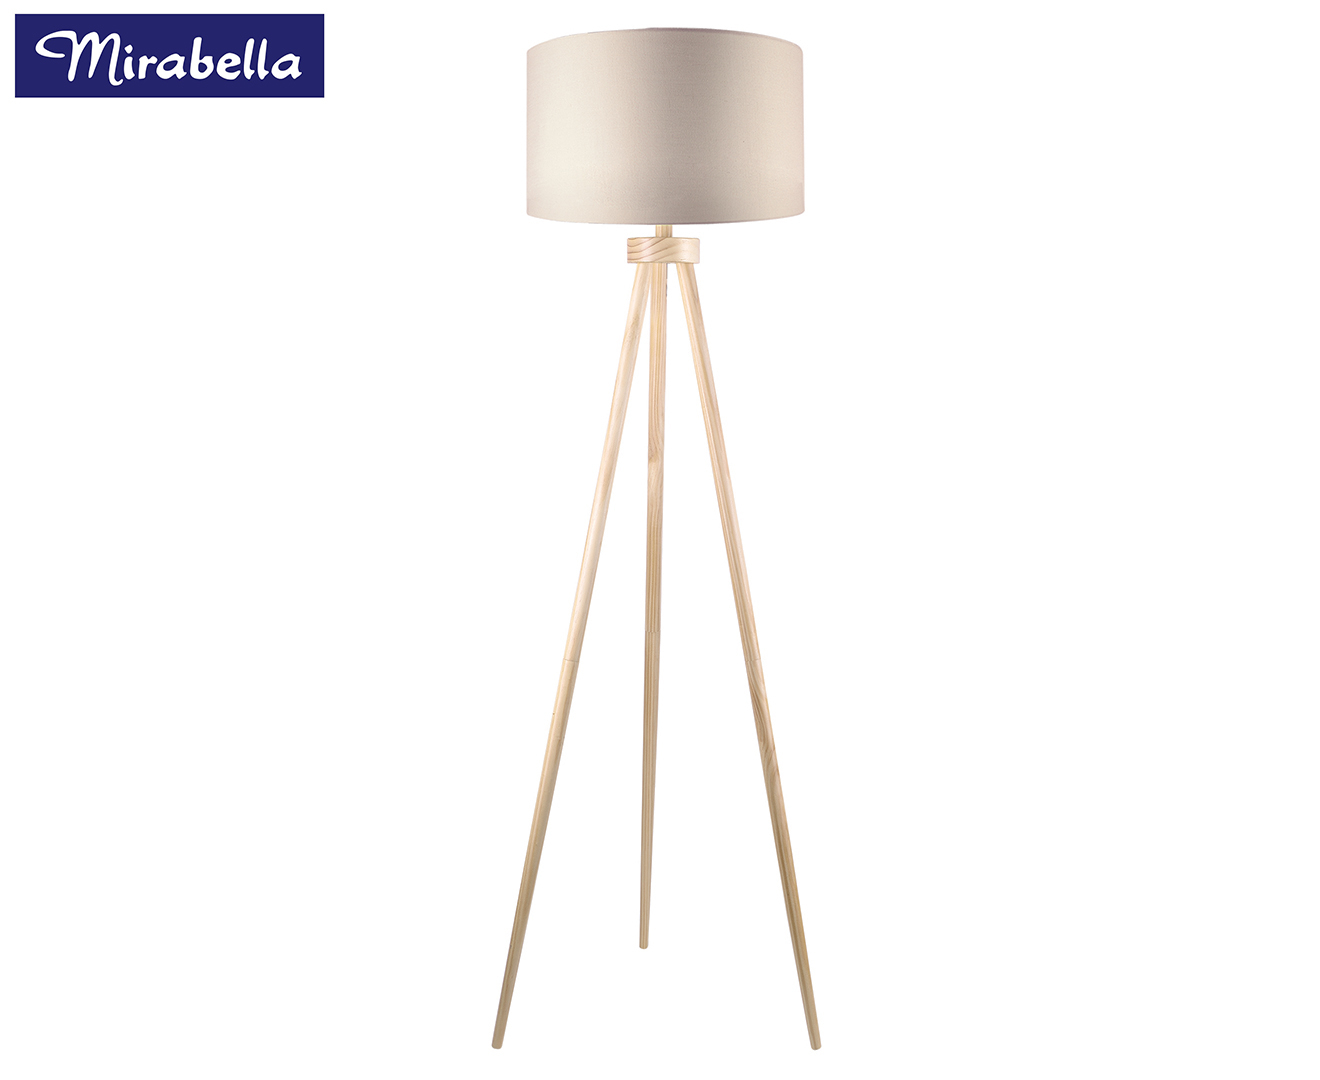 Mirabella Kelly Floor Lamp